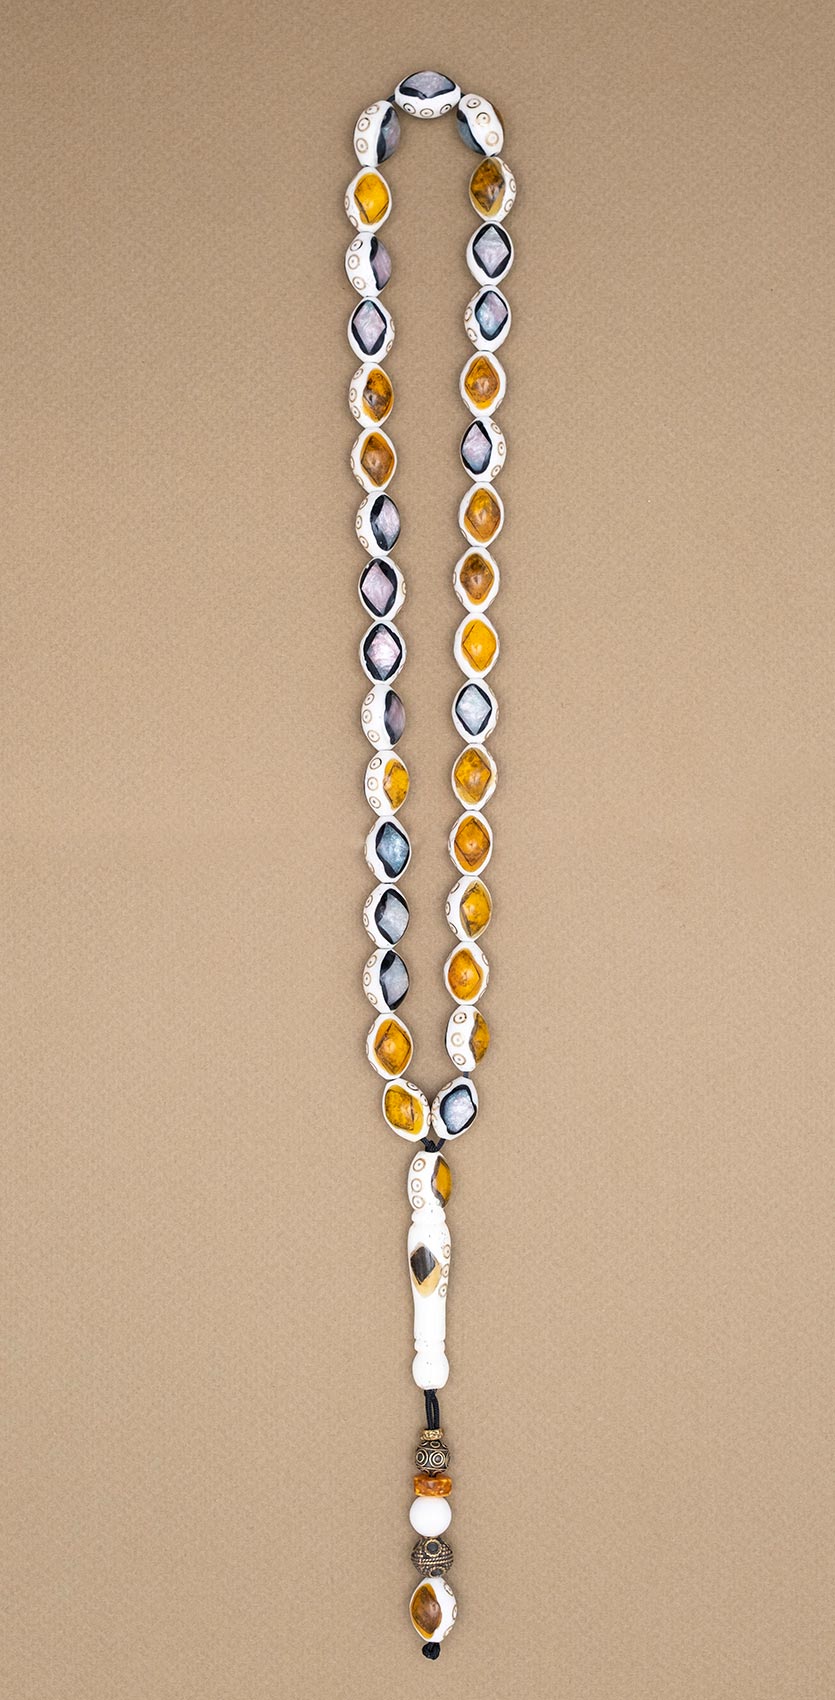 Muslim Prayer beads made of camel bone with inlaid enamel and bronze